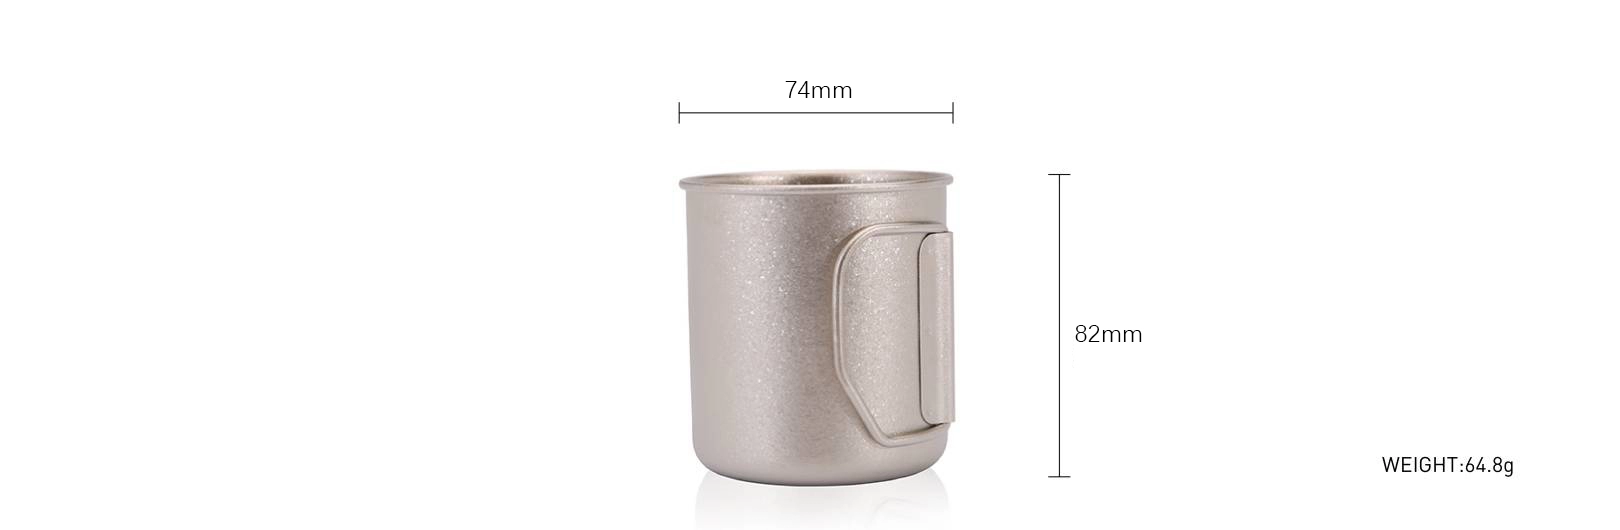 details of Titanium Water /Coffee Tea Cup Mug with Foldable Handle Mug